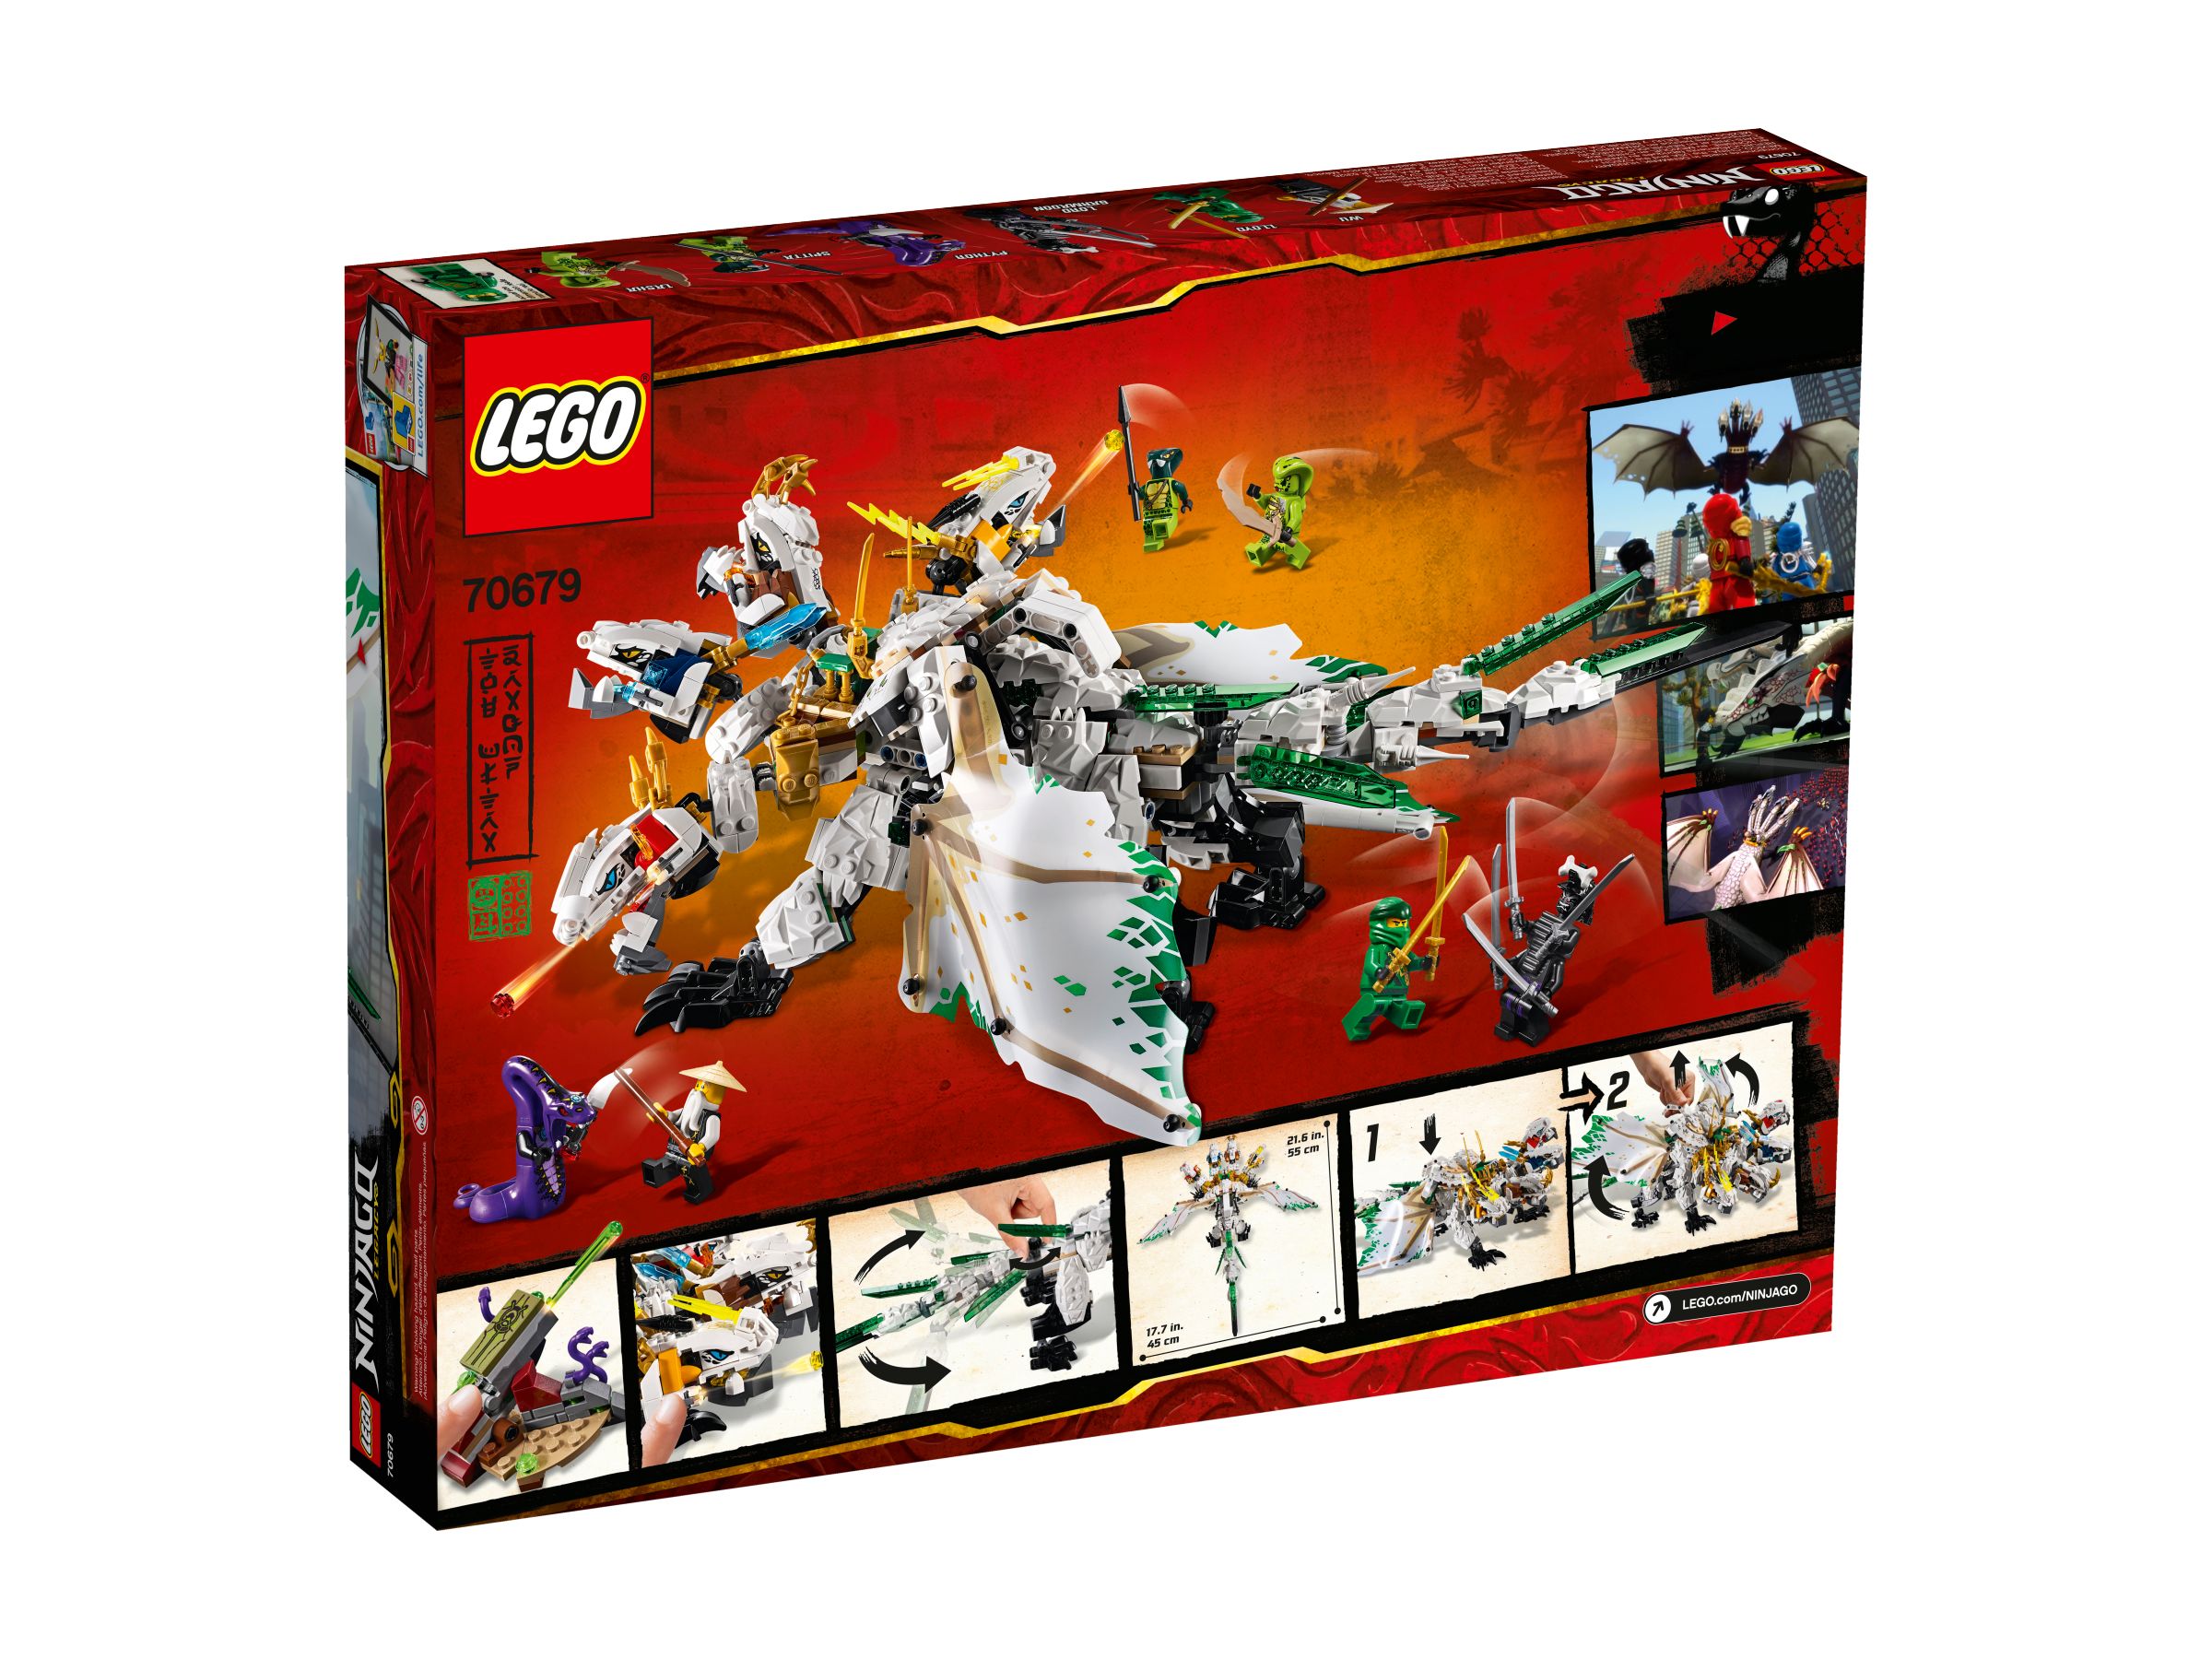 LEGO Ninjago 70679 Der Ultradrache LEGO_70679_alt4.jpg